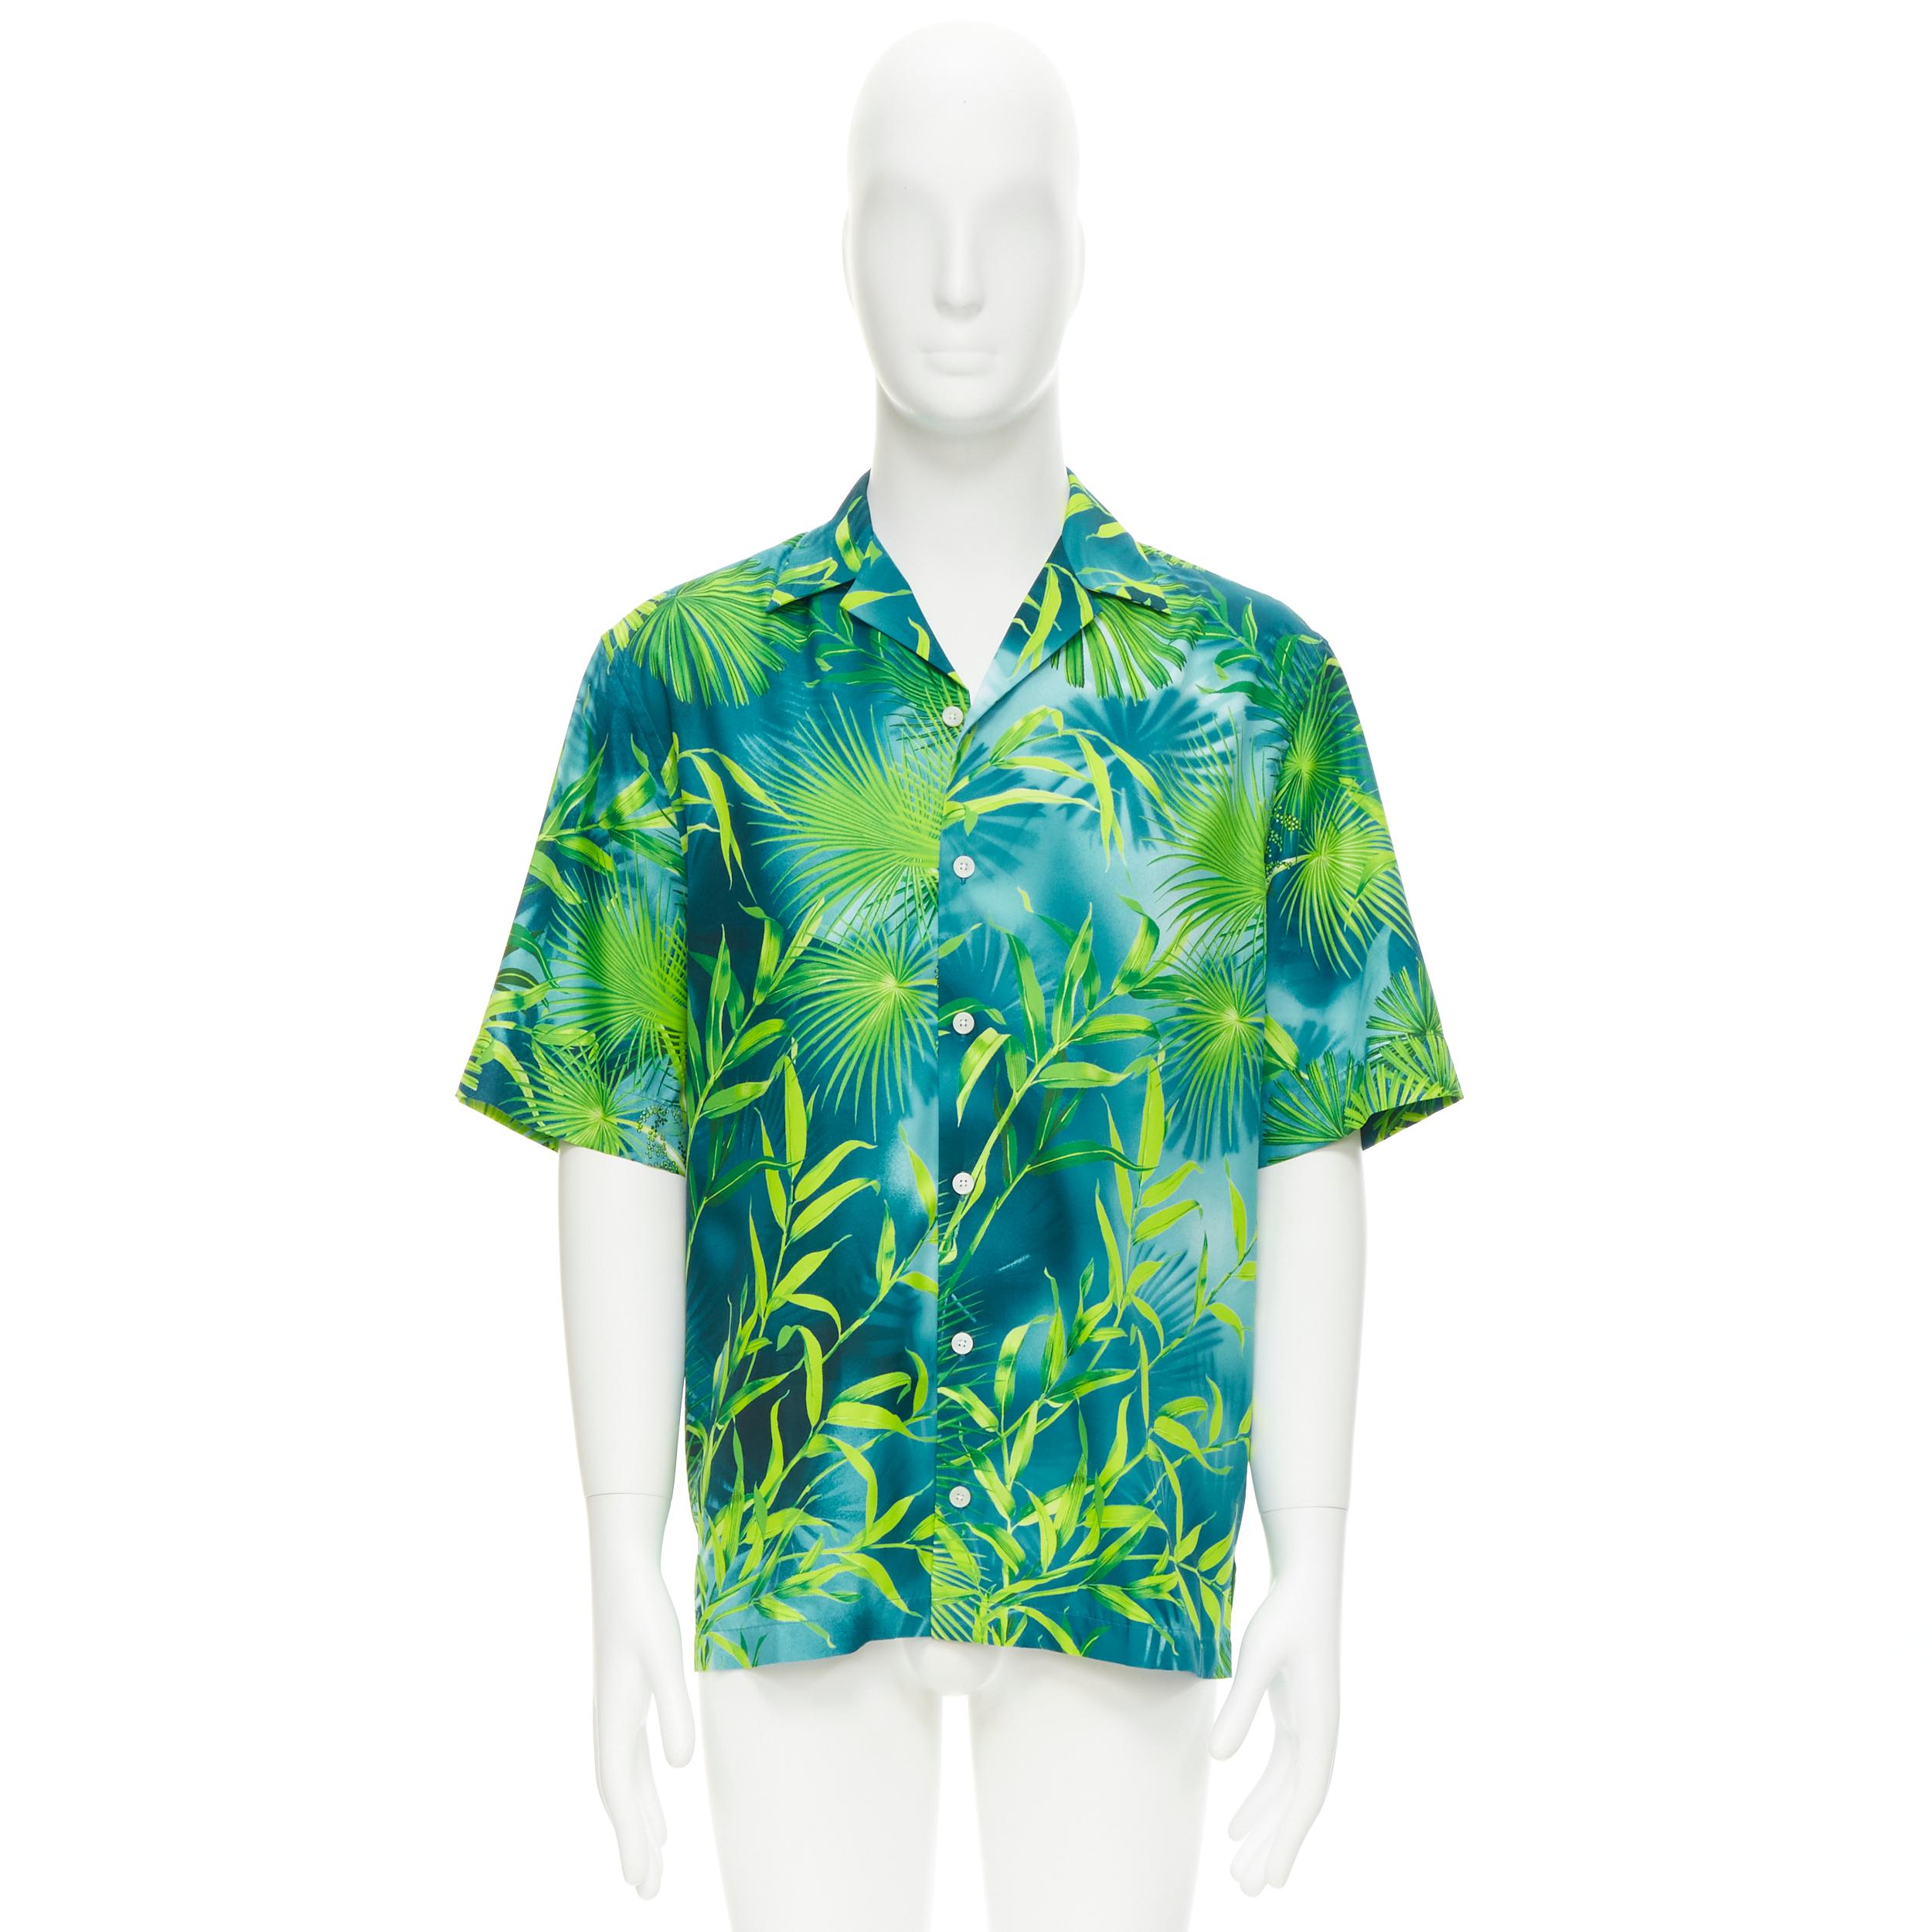 new VERSACE 2020 Iconic JLo Jungle print green tropical print shirt EU38 S 3